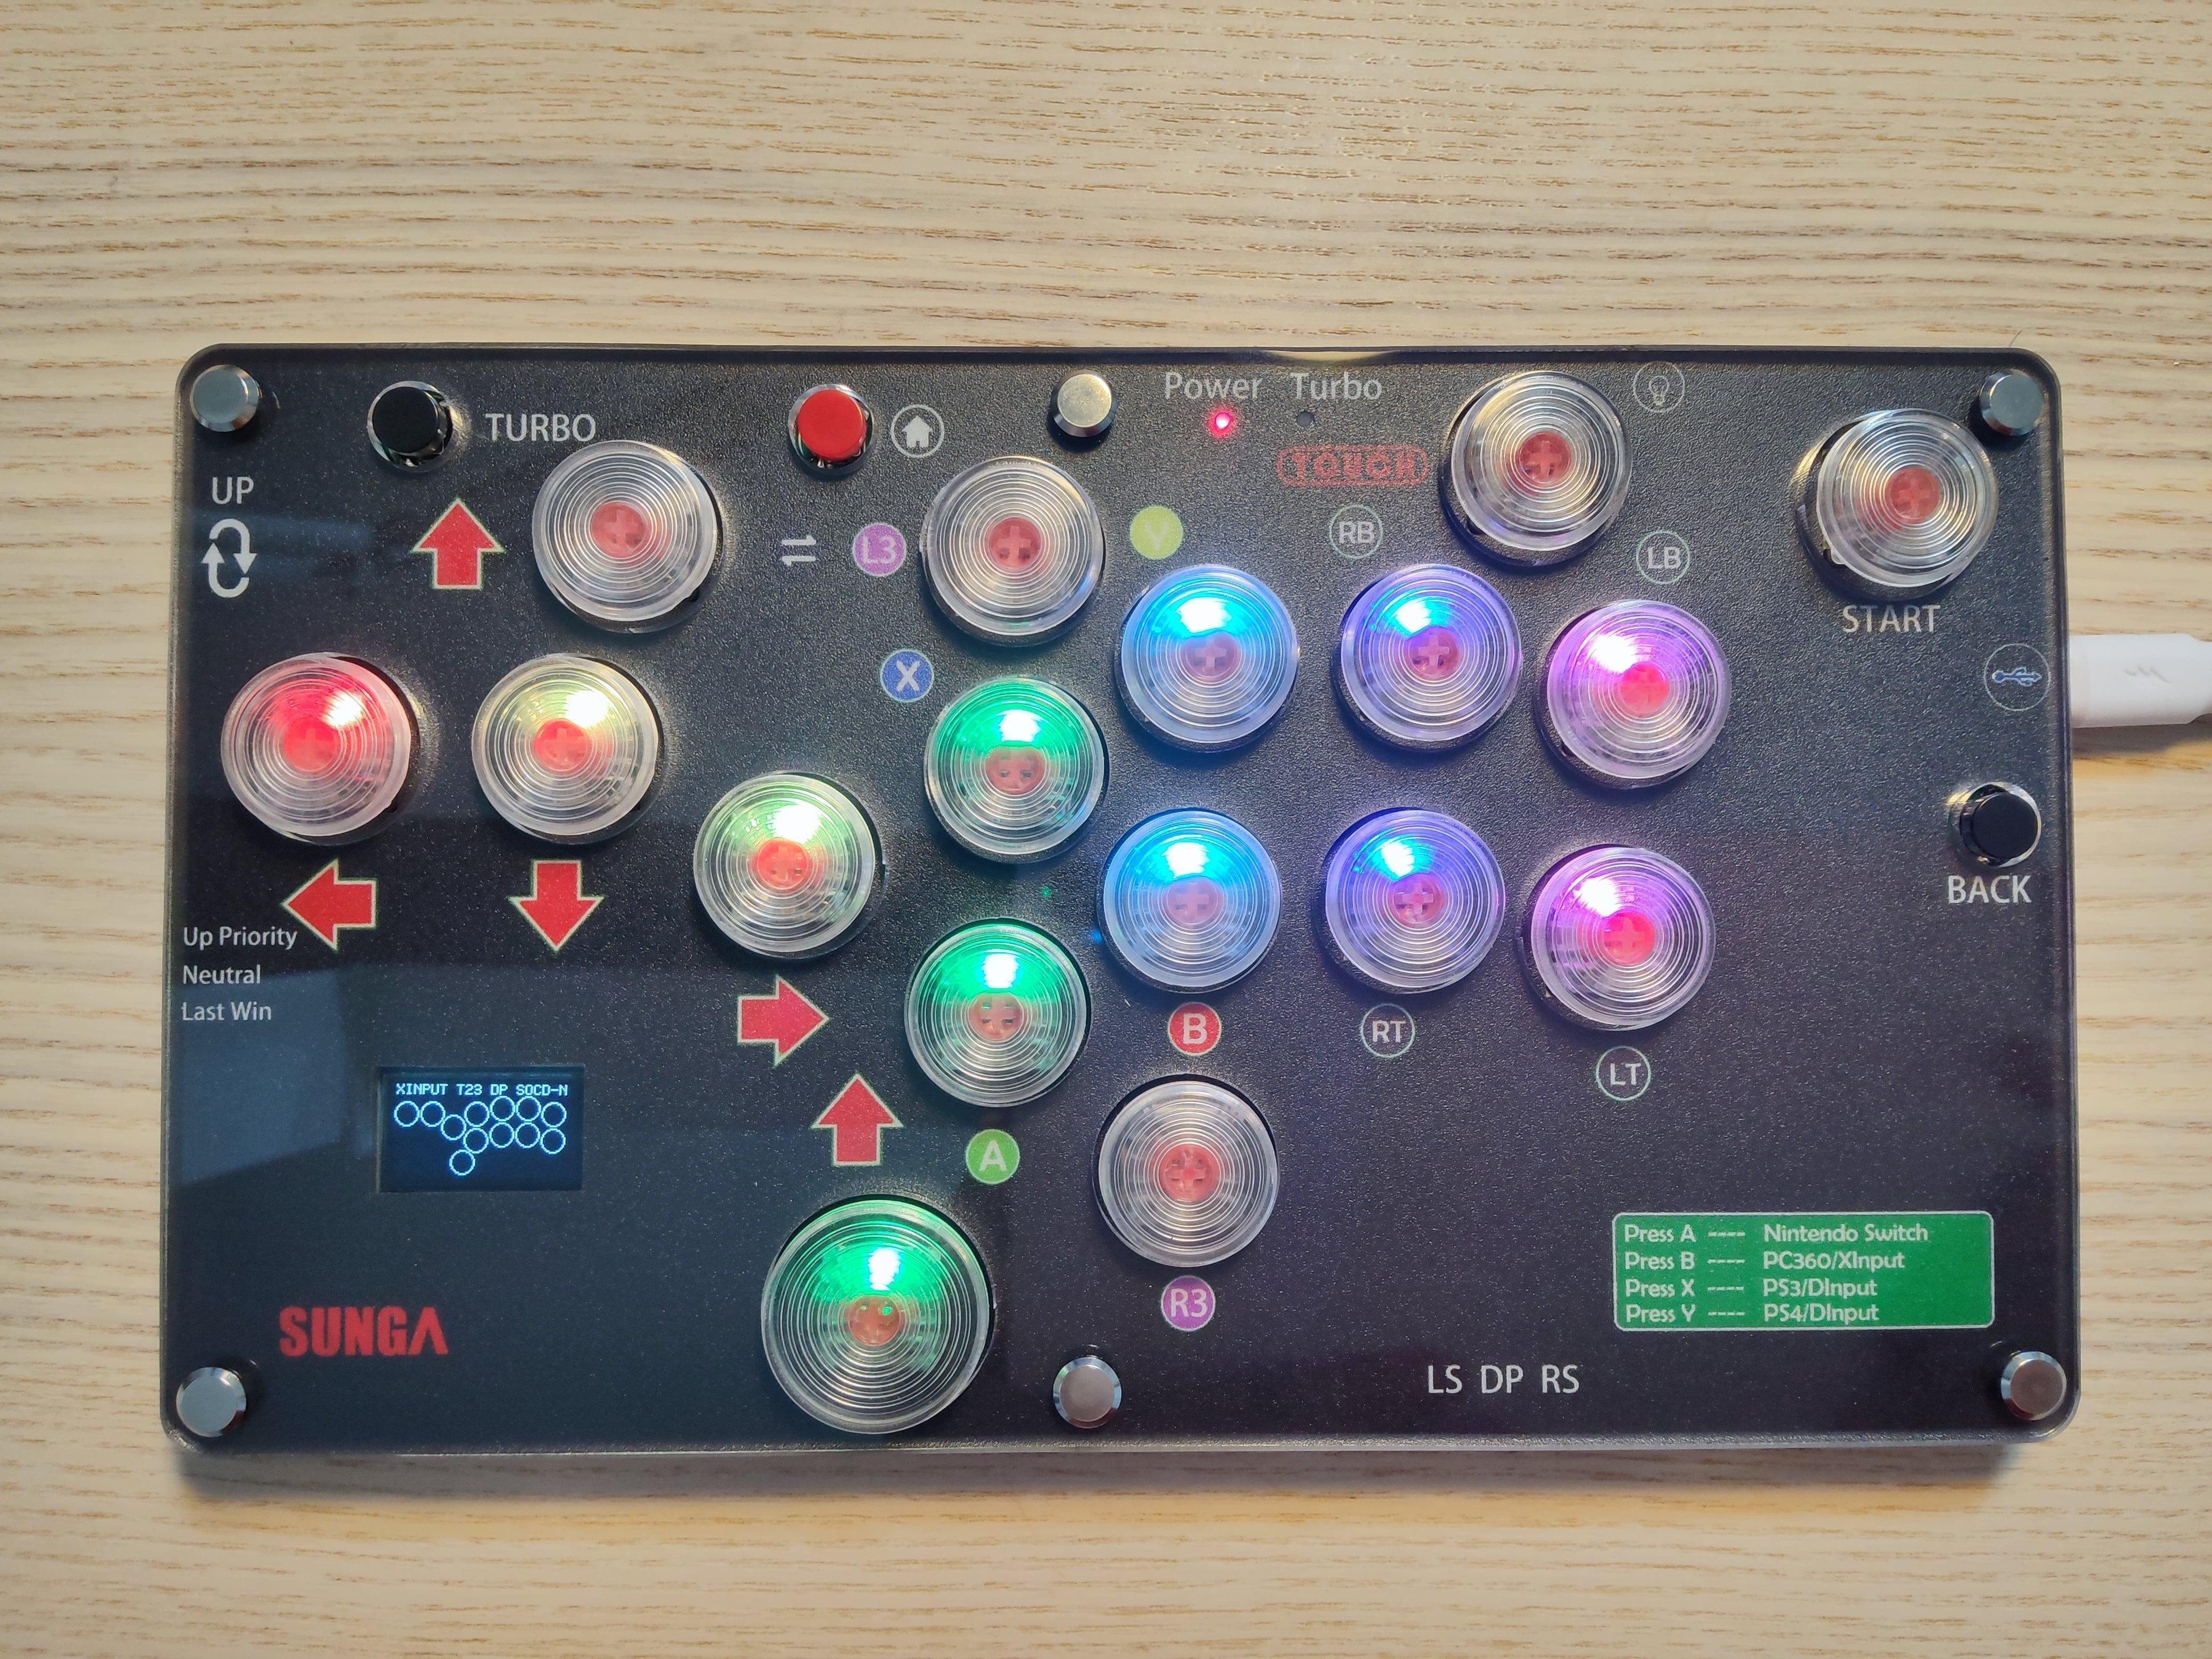 SUNGA 17 Buttonsレバーレスコントローラー - その他